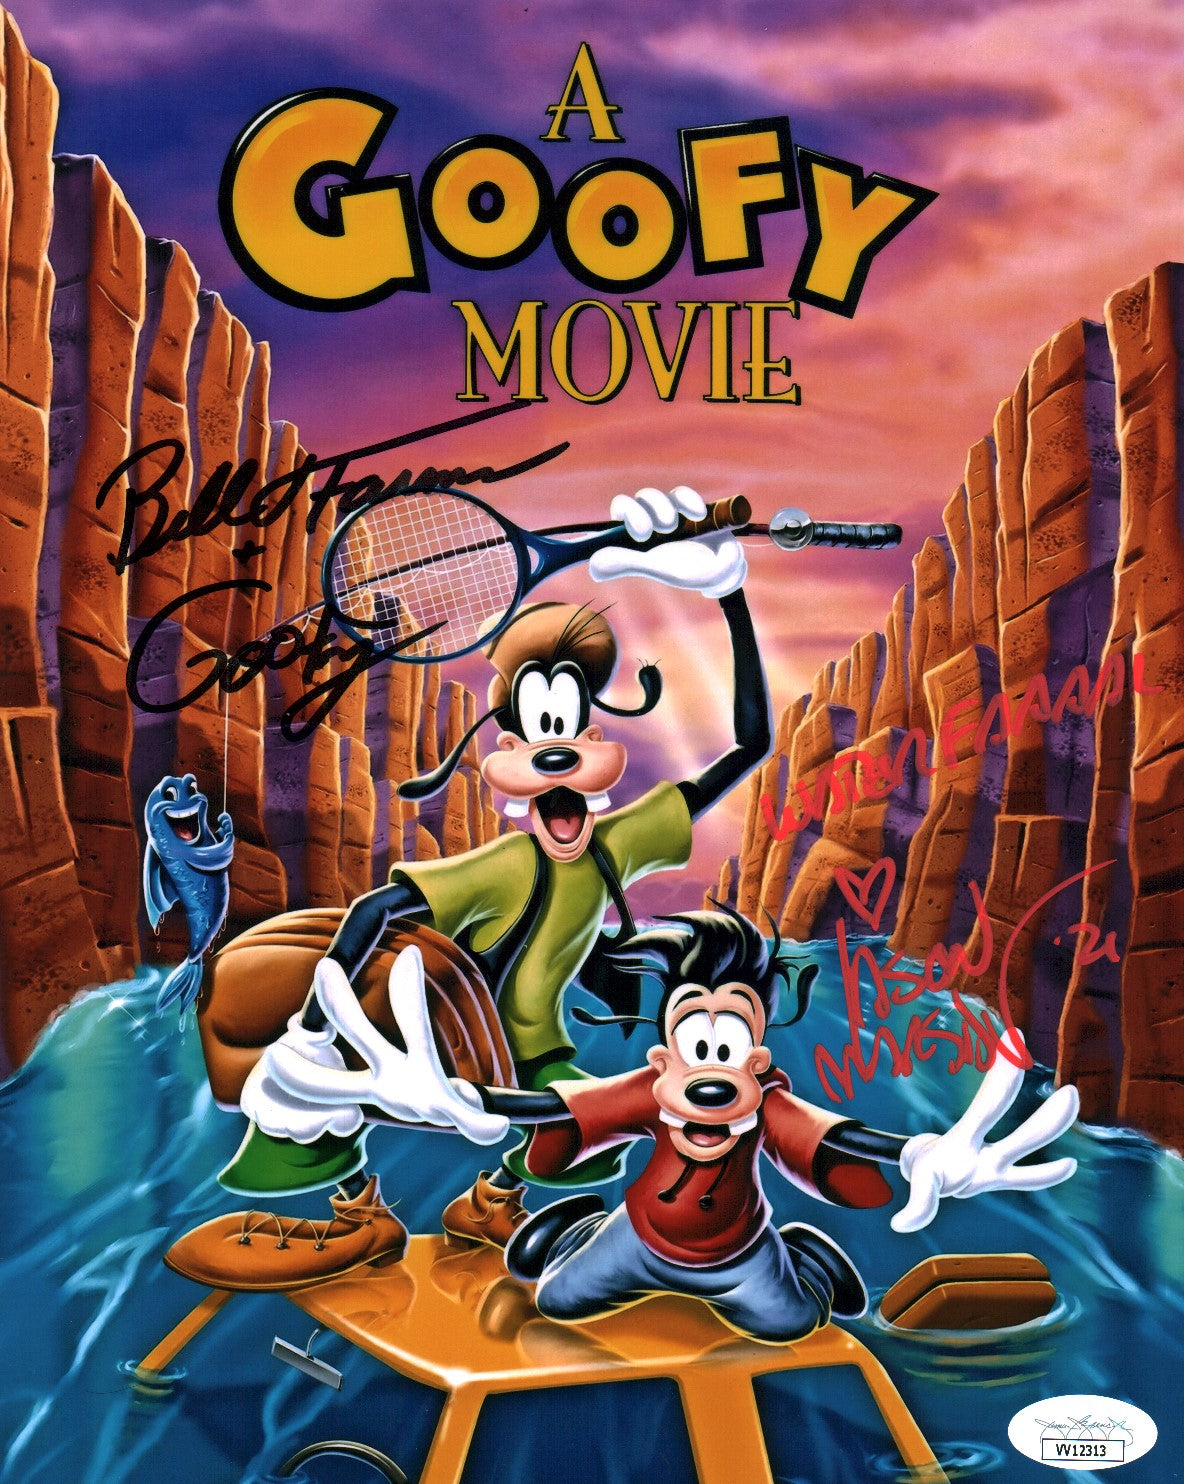 Disney Goofy Movie 8x10 Signed Photo Farmer Marsden JSA COA Certified Autograph